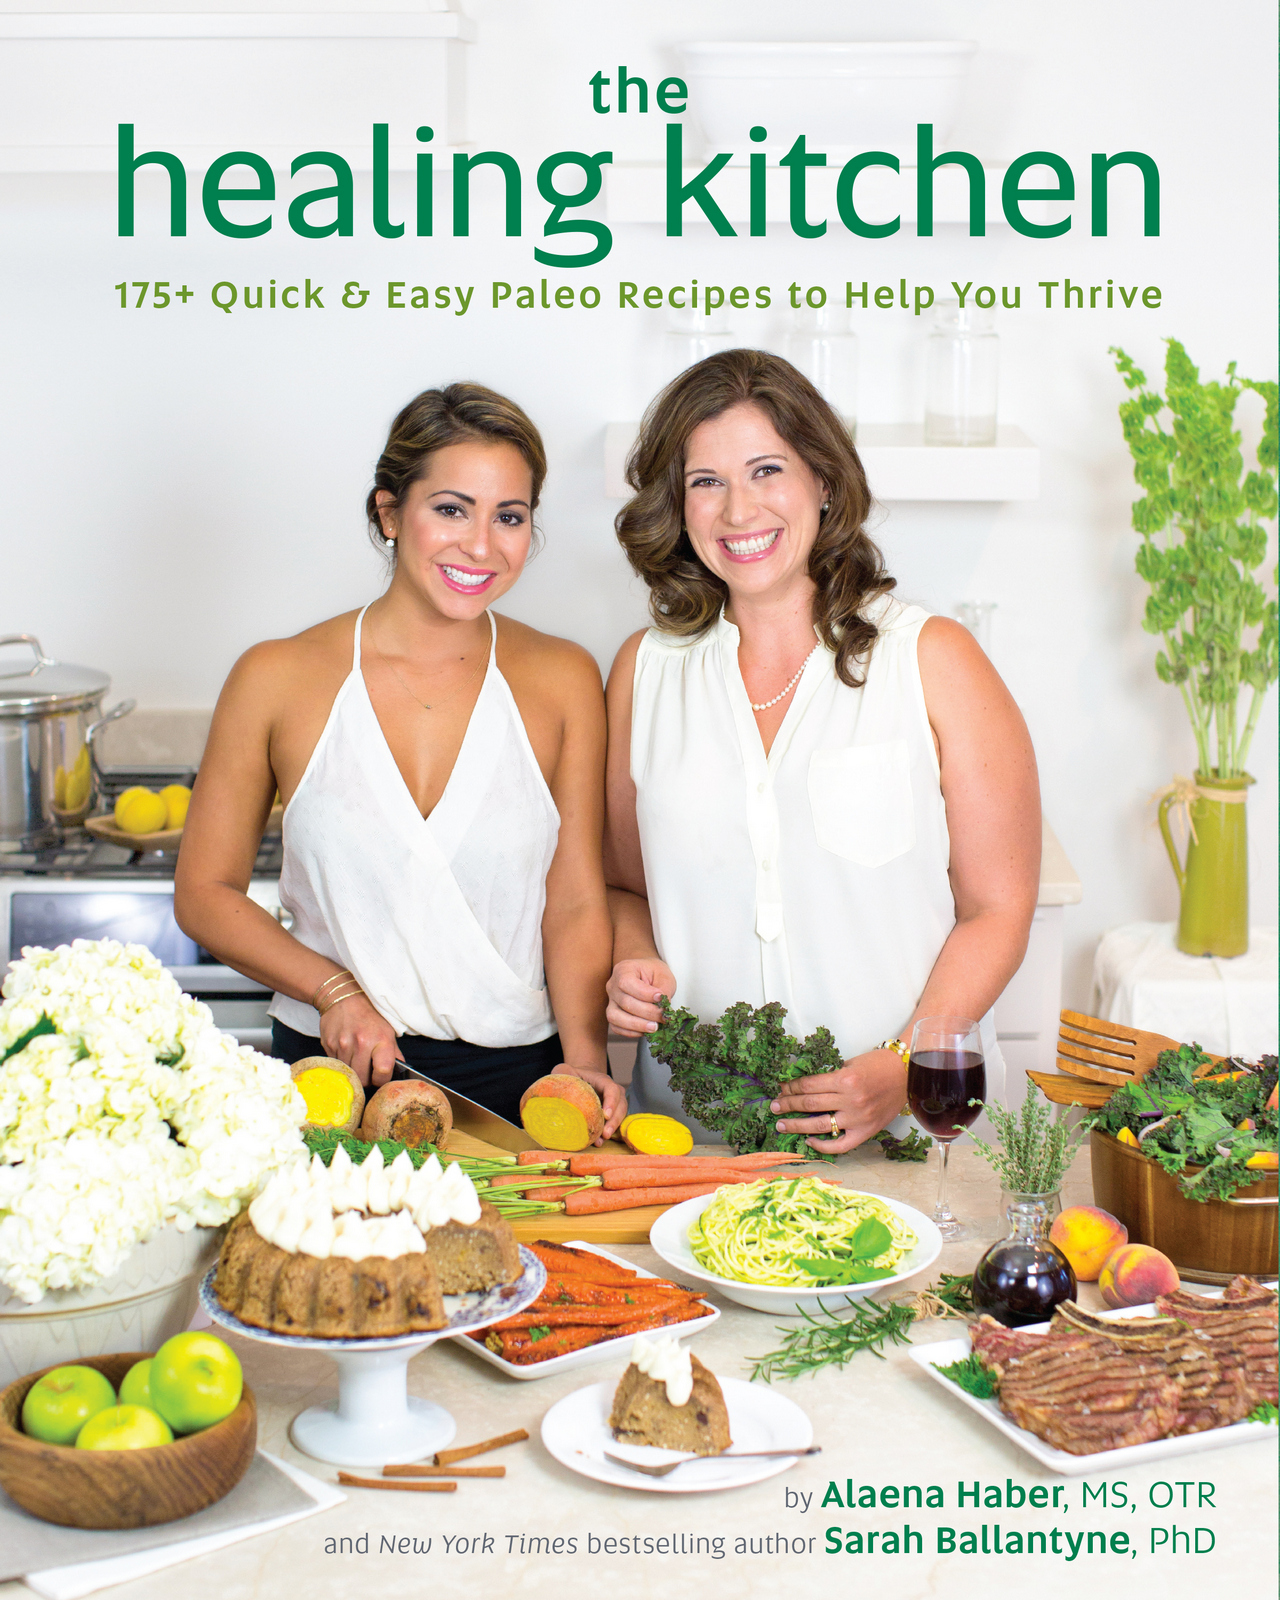 Healing Kitchen Cookbook Review & Sample Recipe | Phoenix Helix